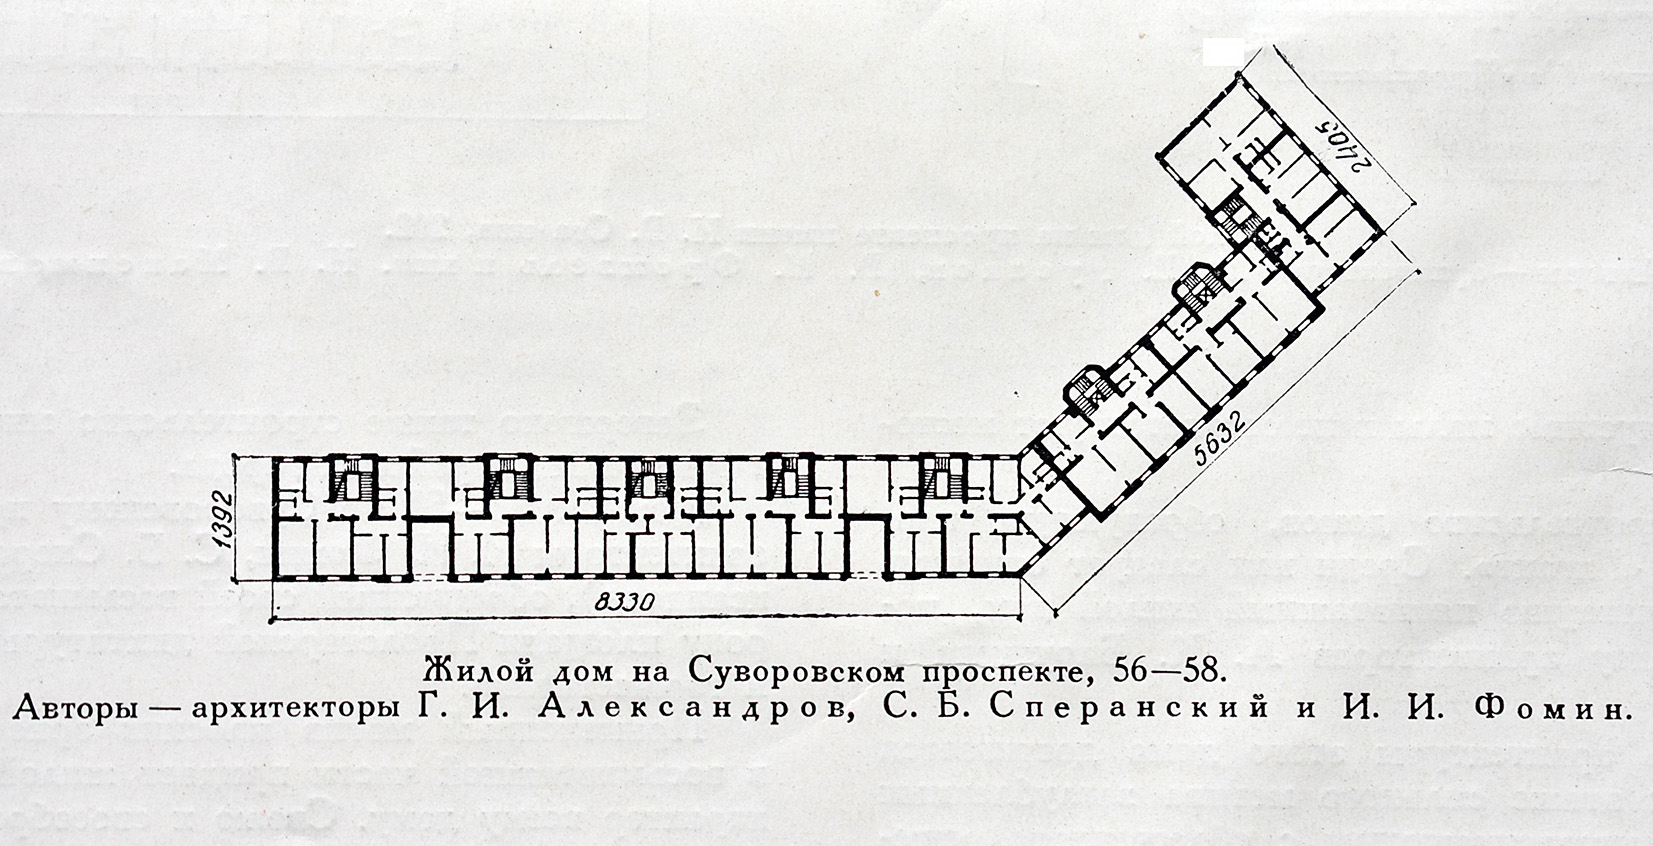 Petersburg, Суворовский проспект, 56. Petersburg — Drawings and Plans